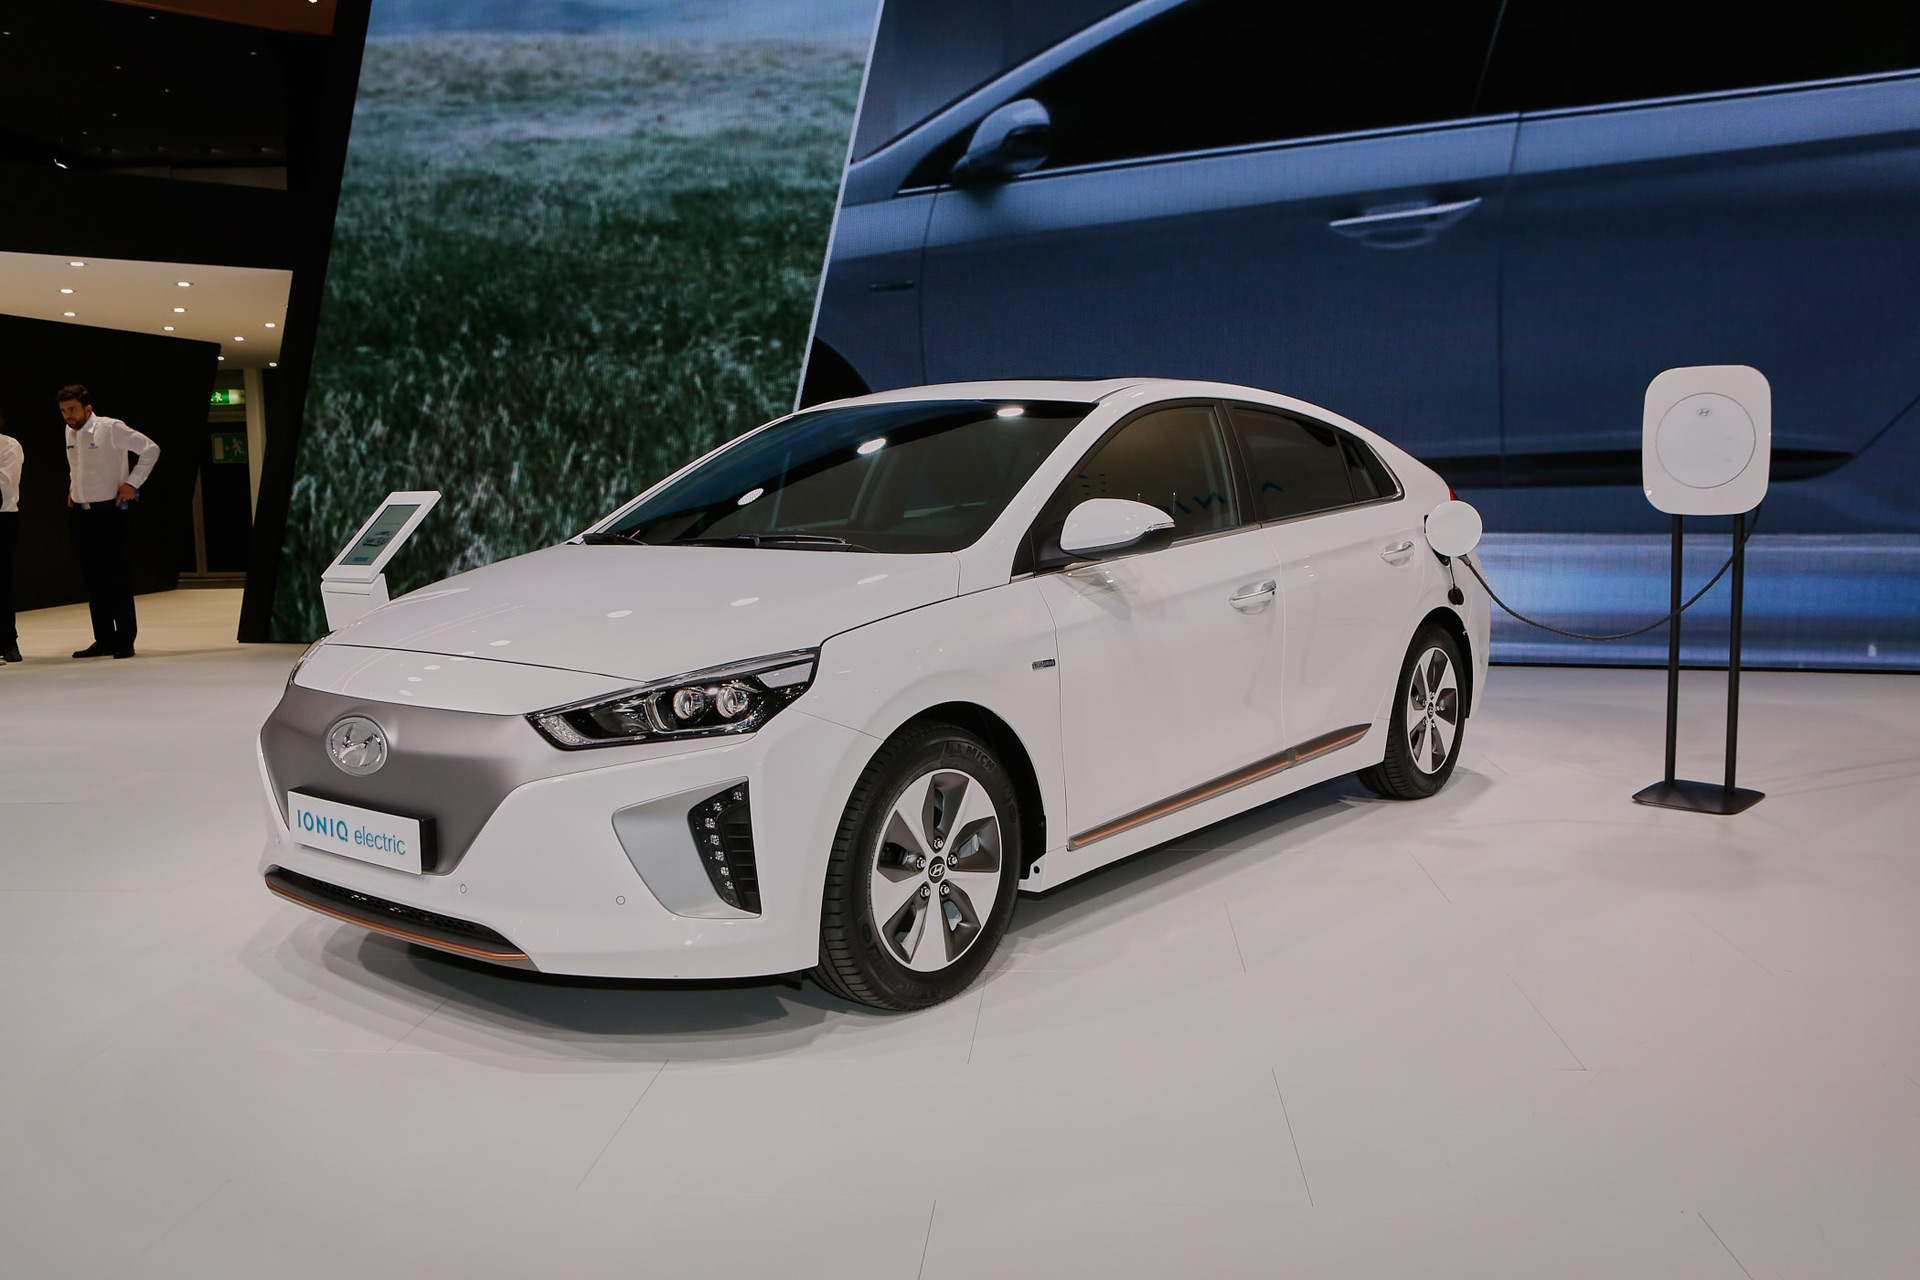 2017 Hyundai Ioniq Electric to offer 110 miles of range: company